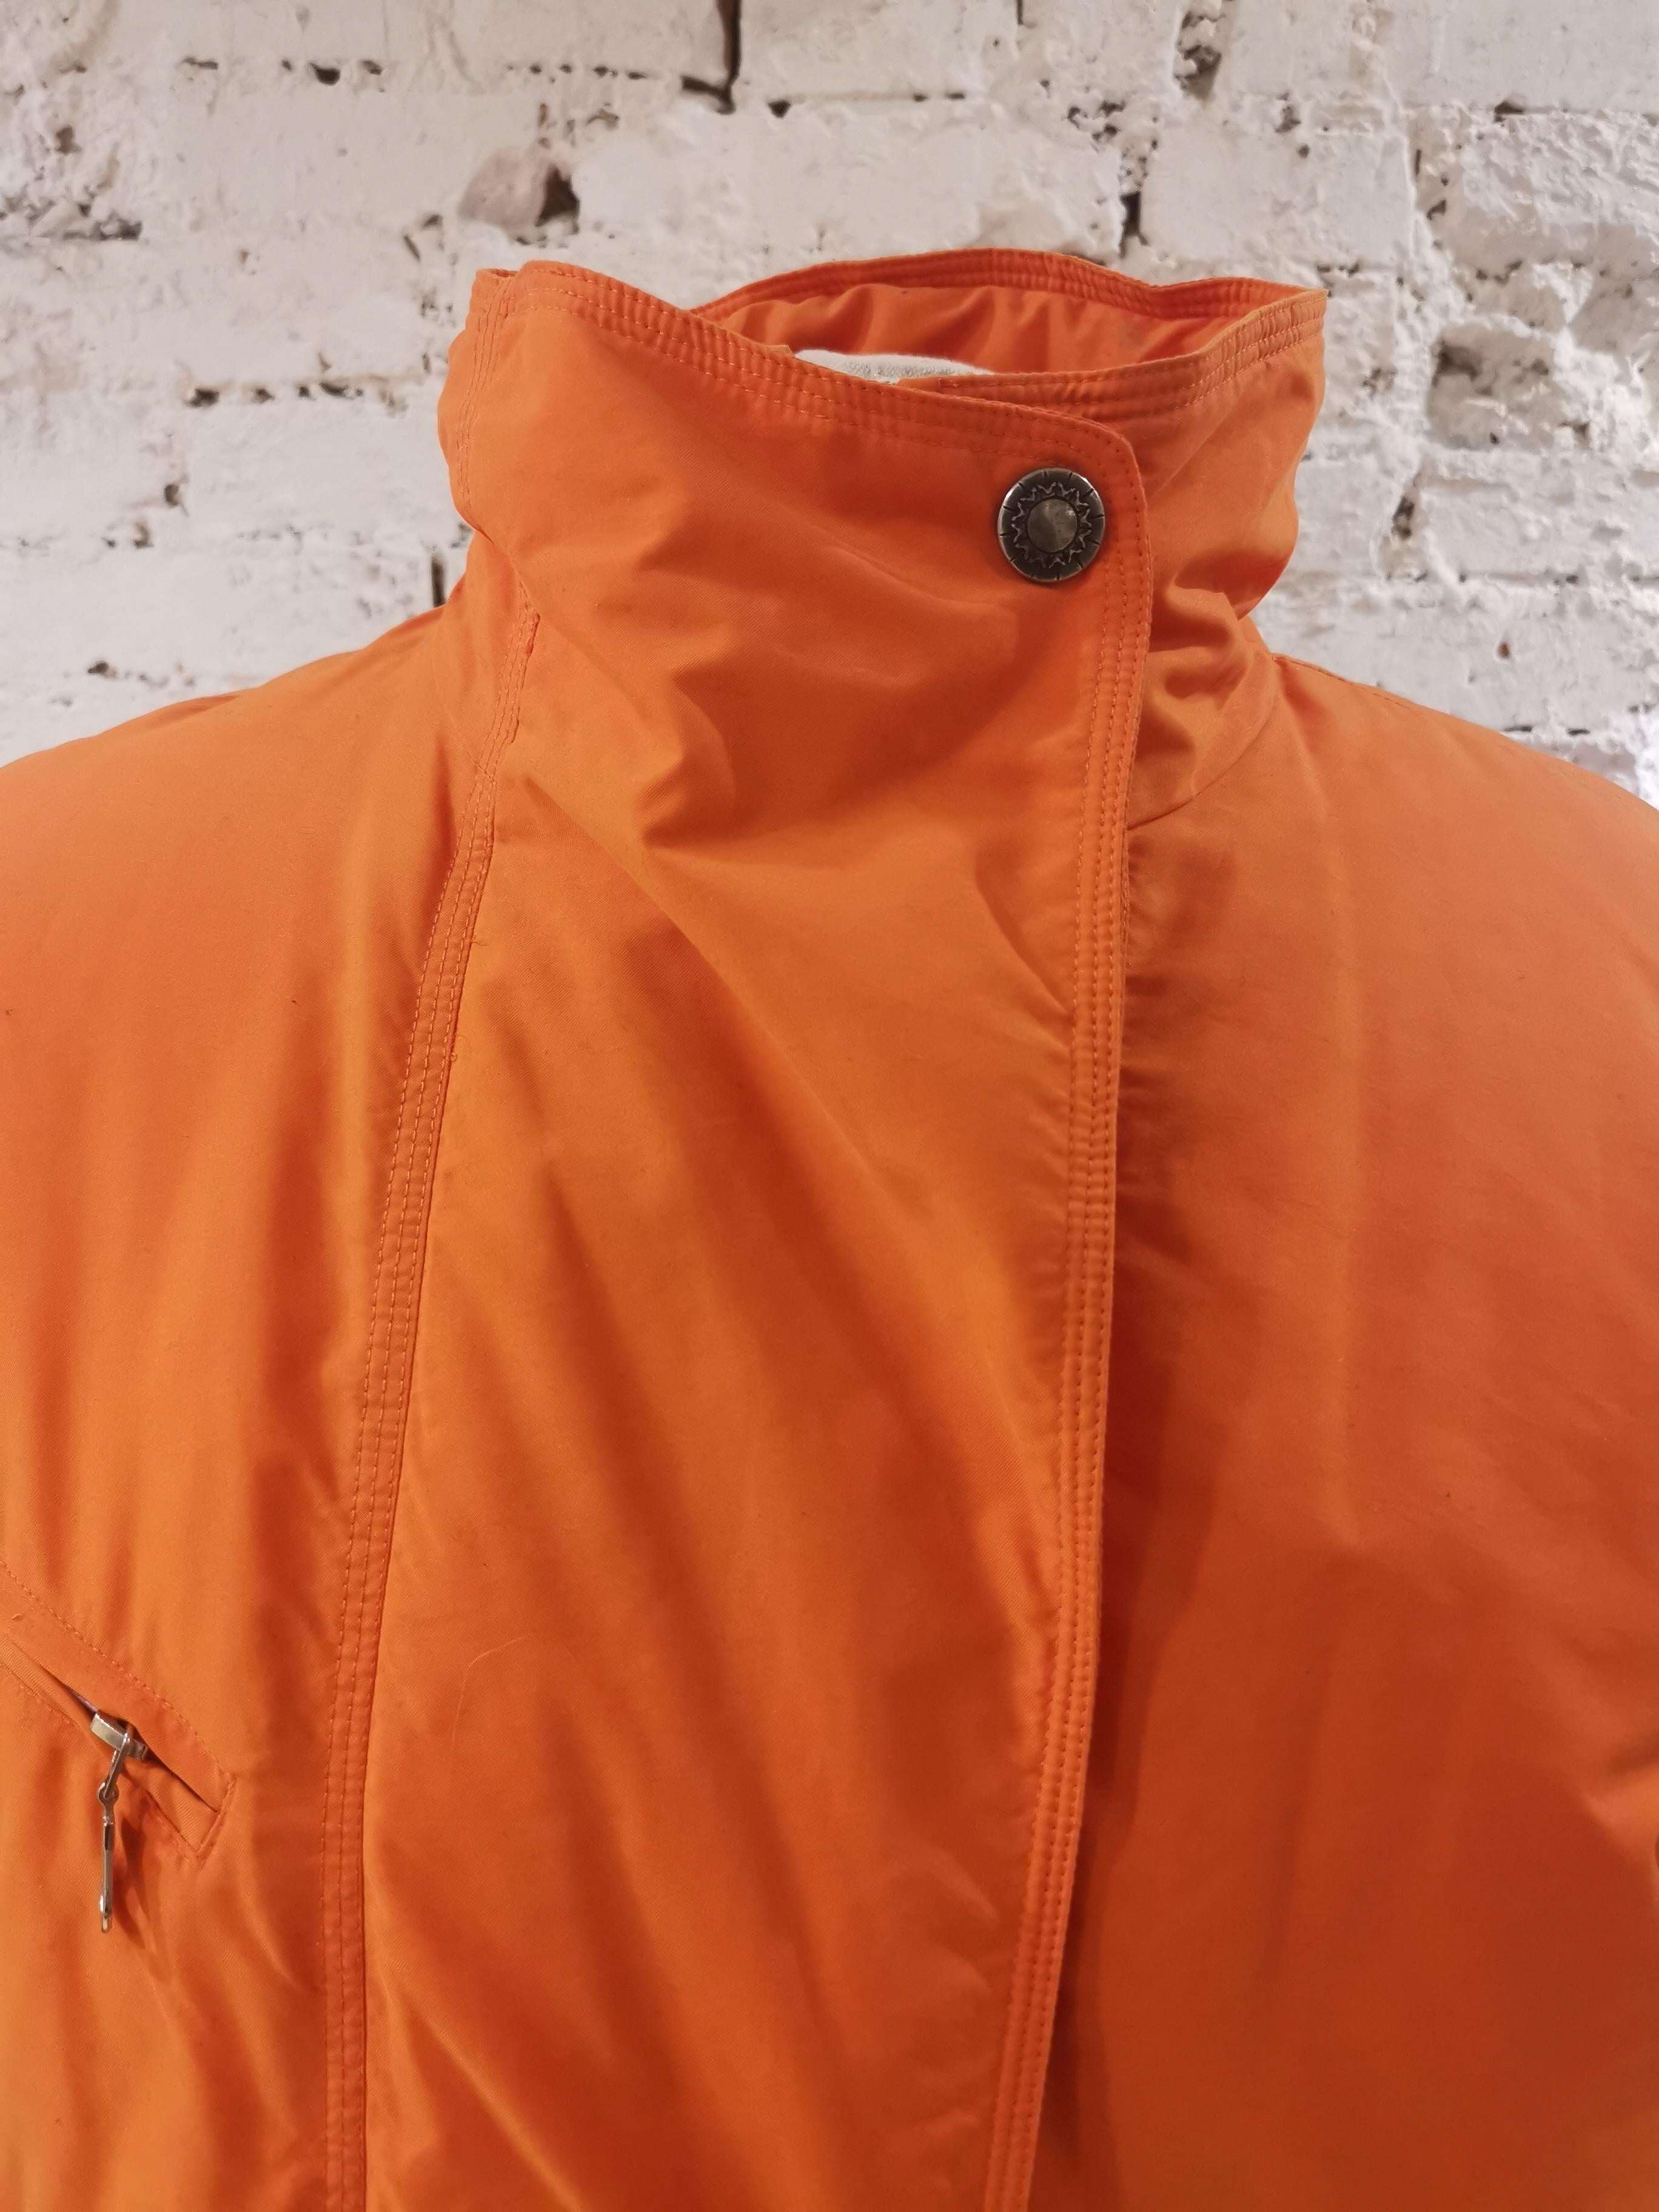 FullForce orange bomber jacket
Size L 